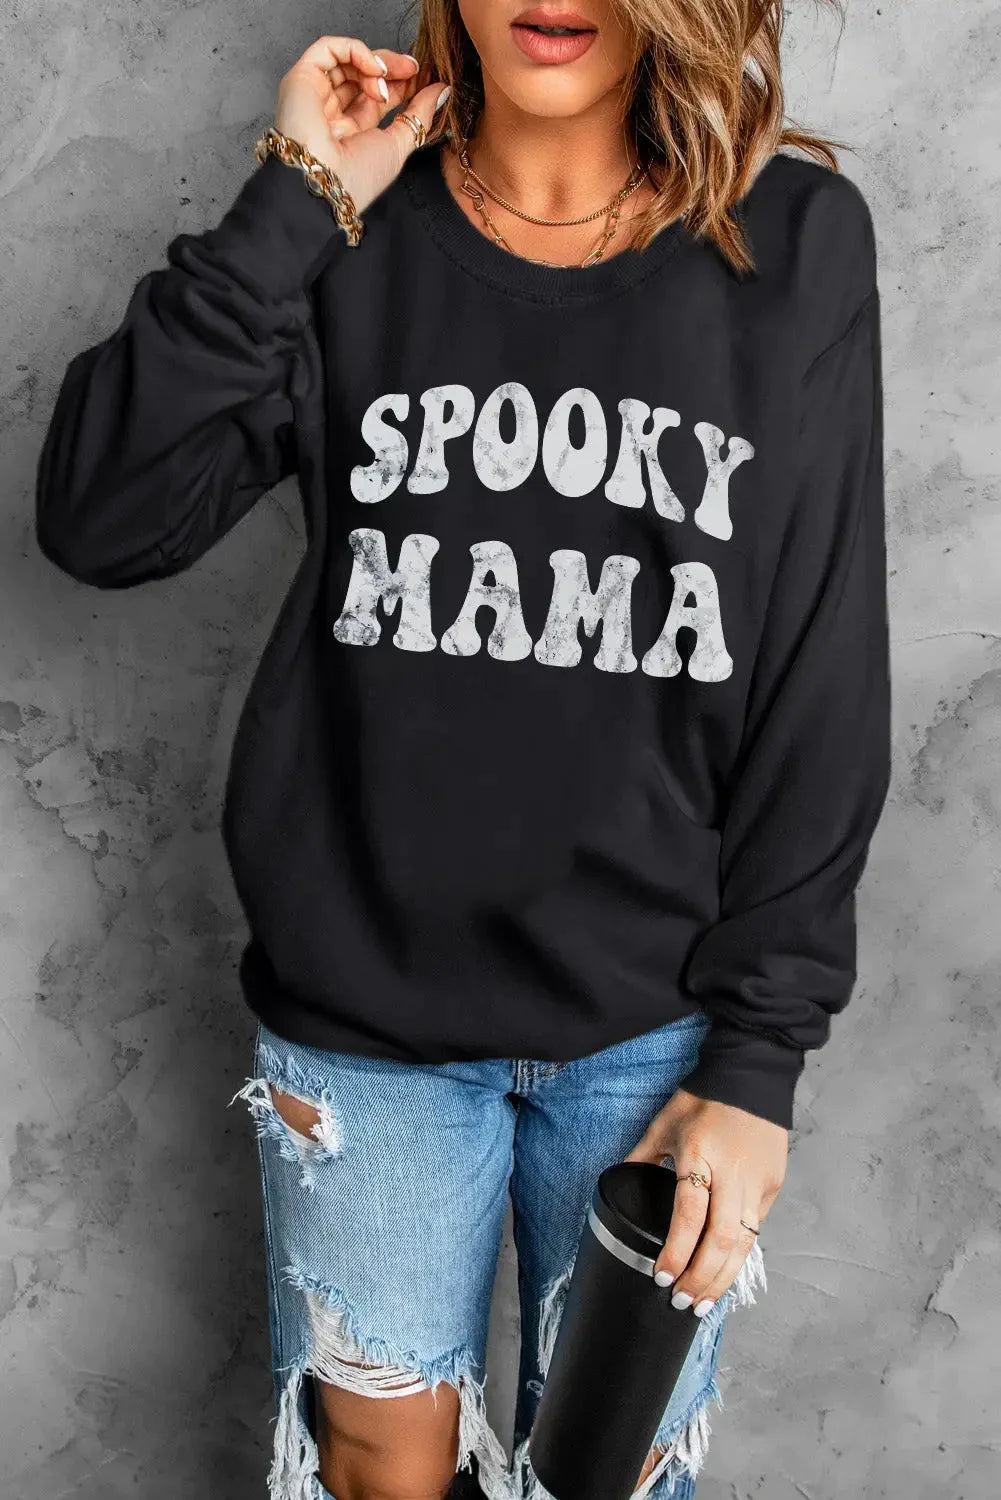 Black spooky season halloween fashion graphic sweatshirt - sweatshirts